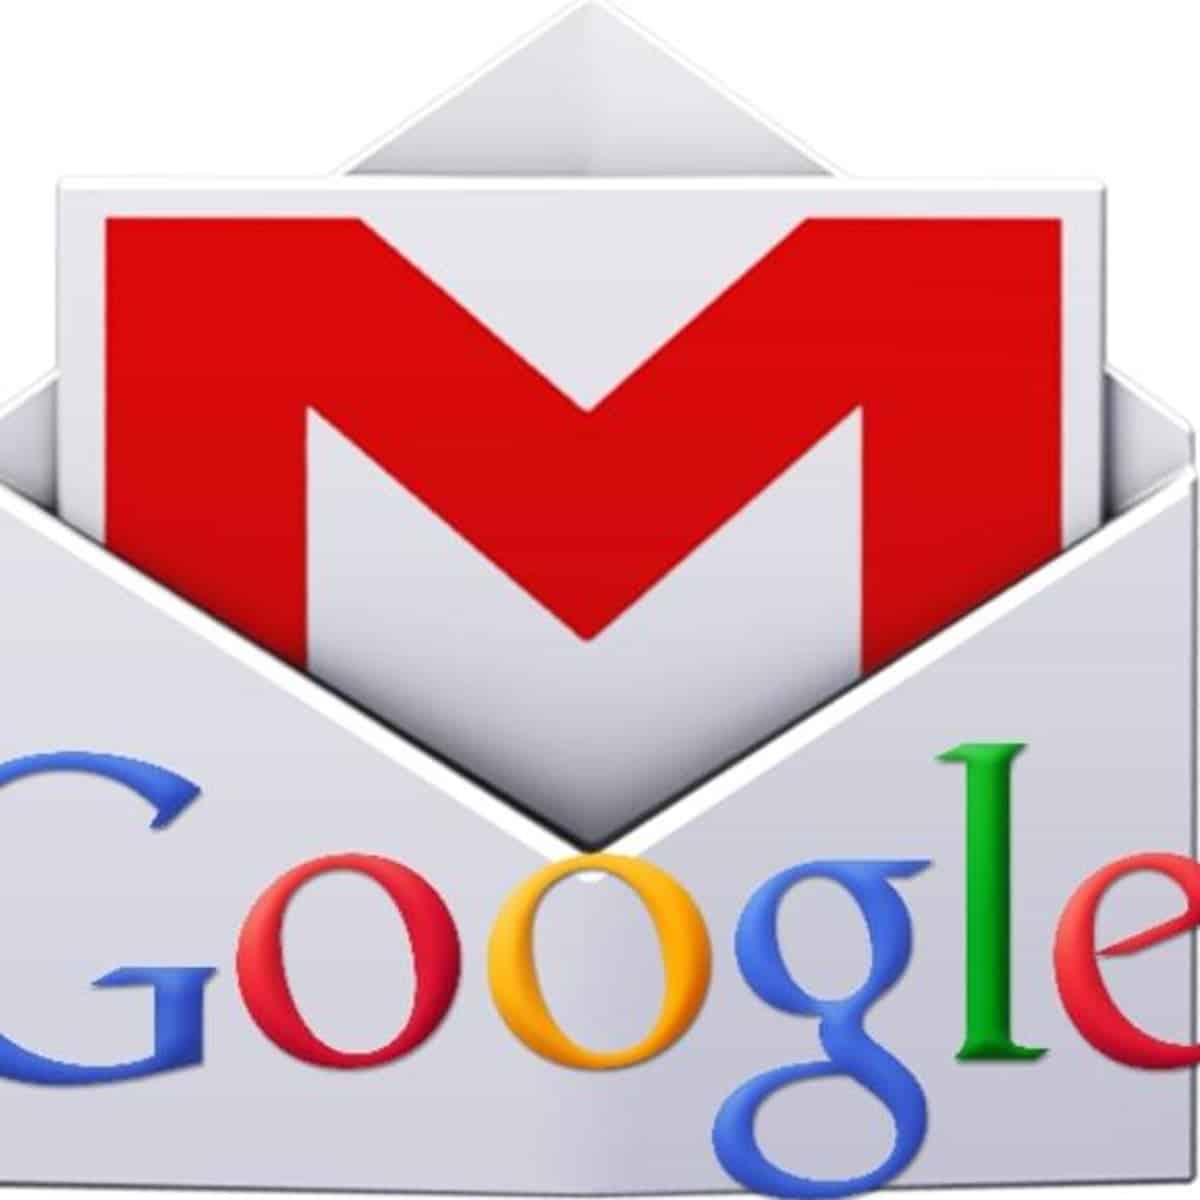 إنشاء حساب Gmail